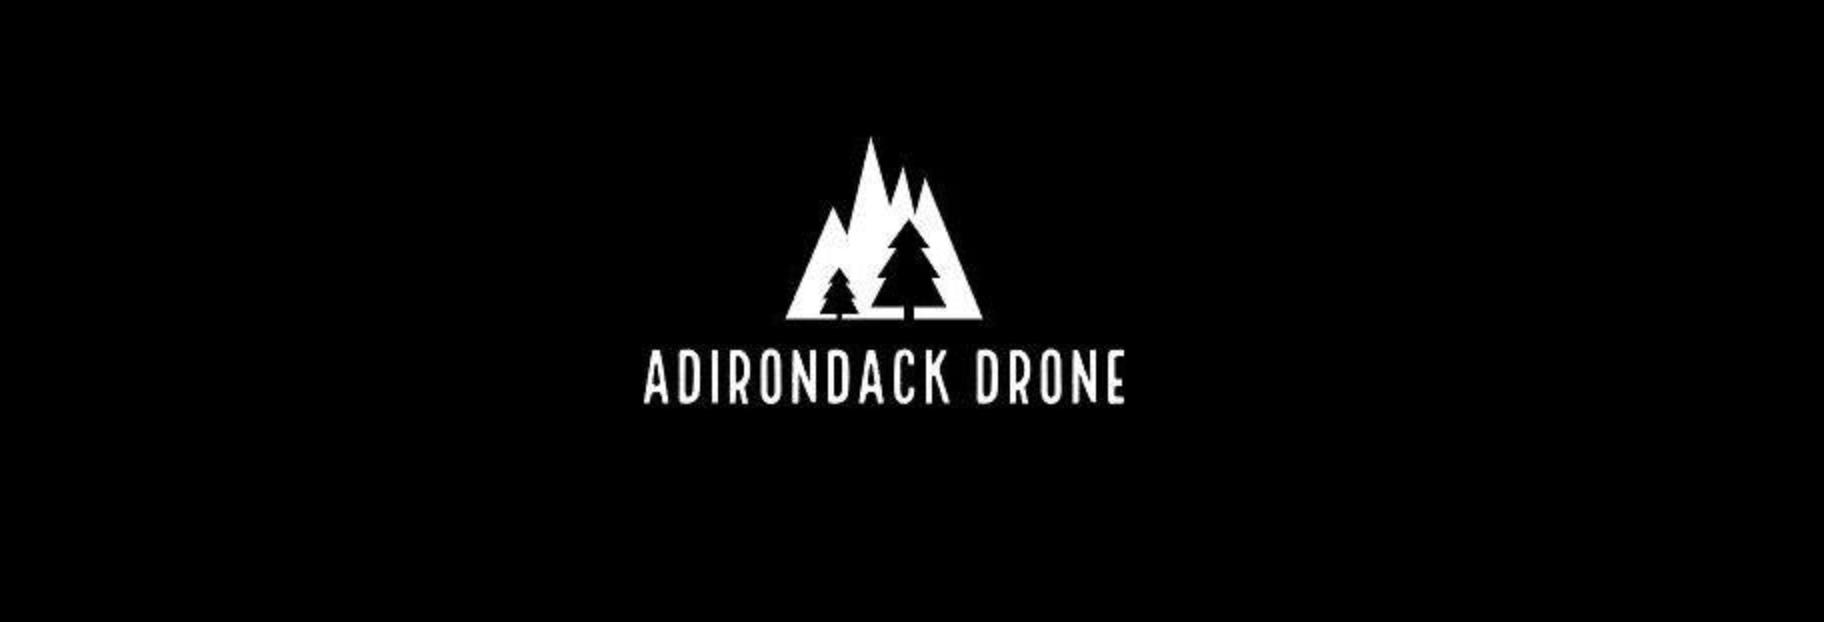 Adirondack drone logo 